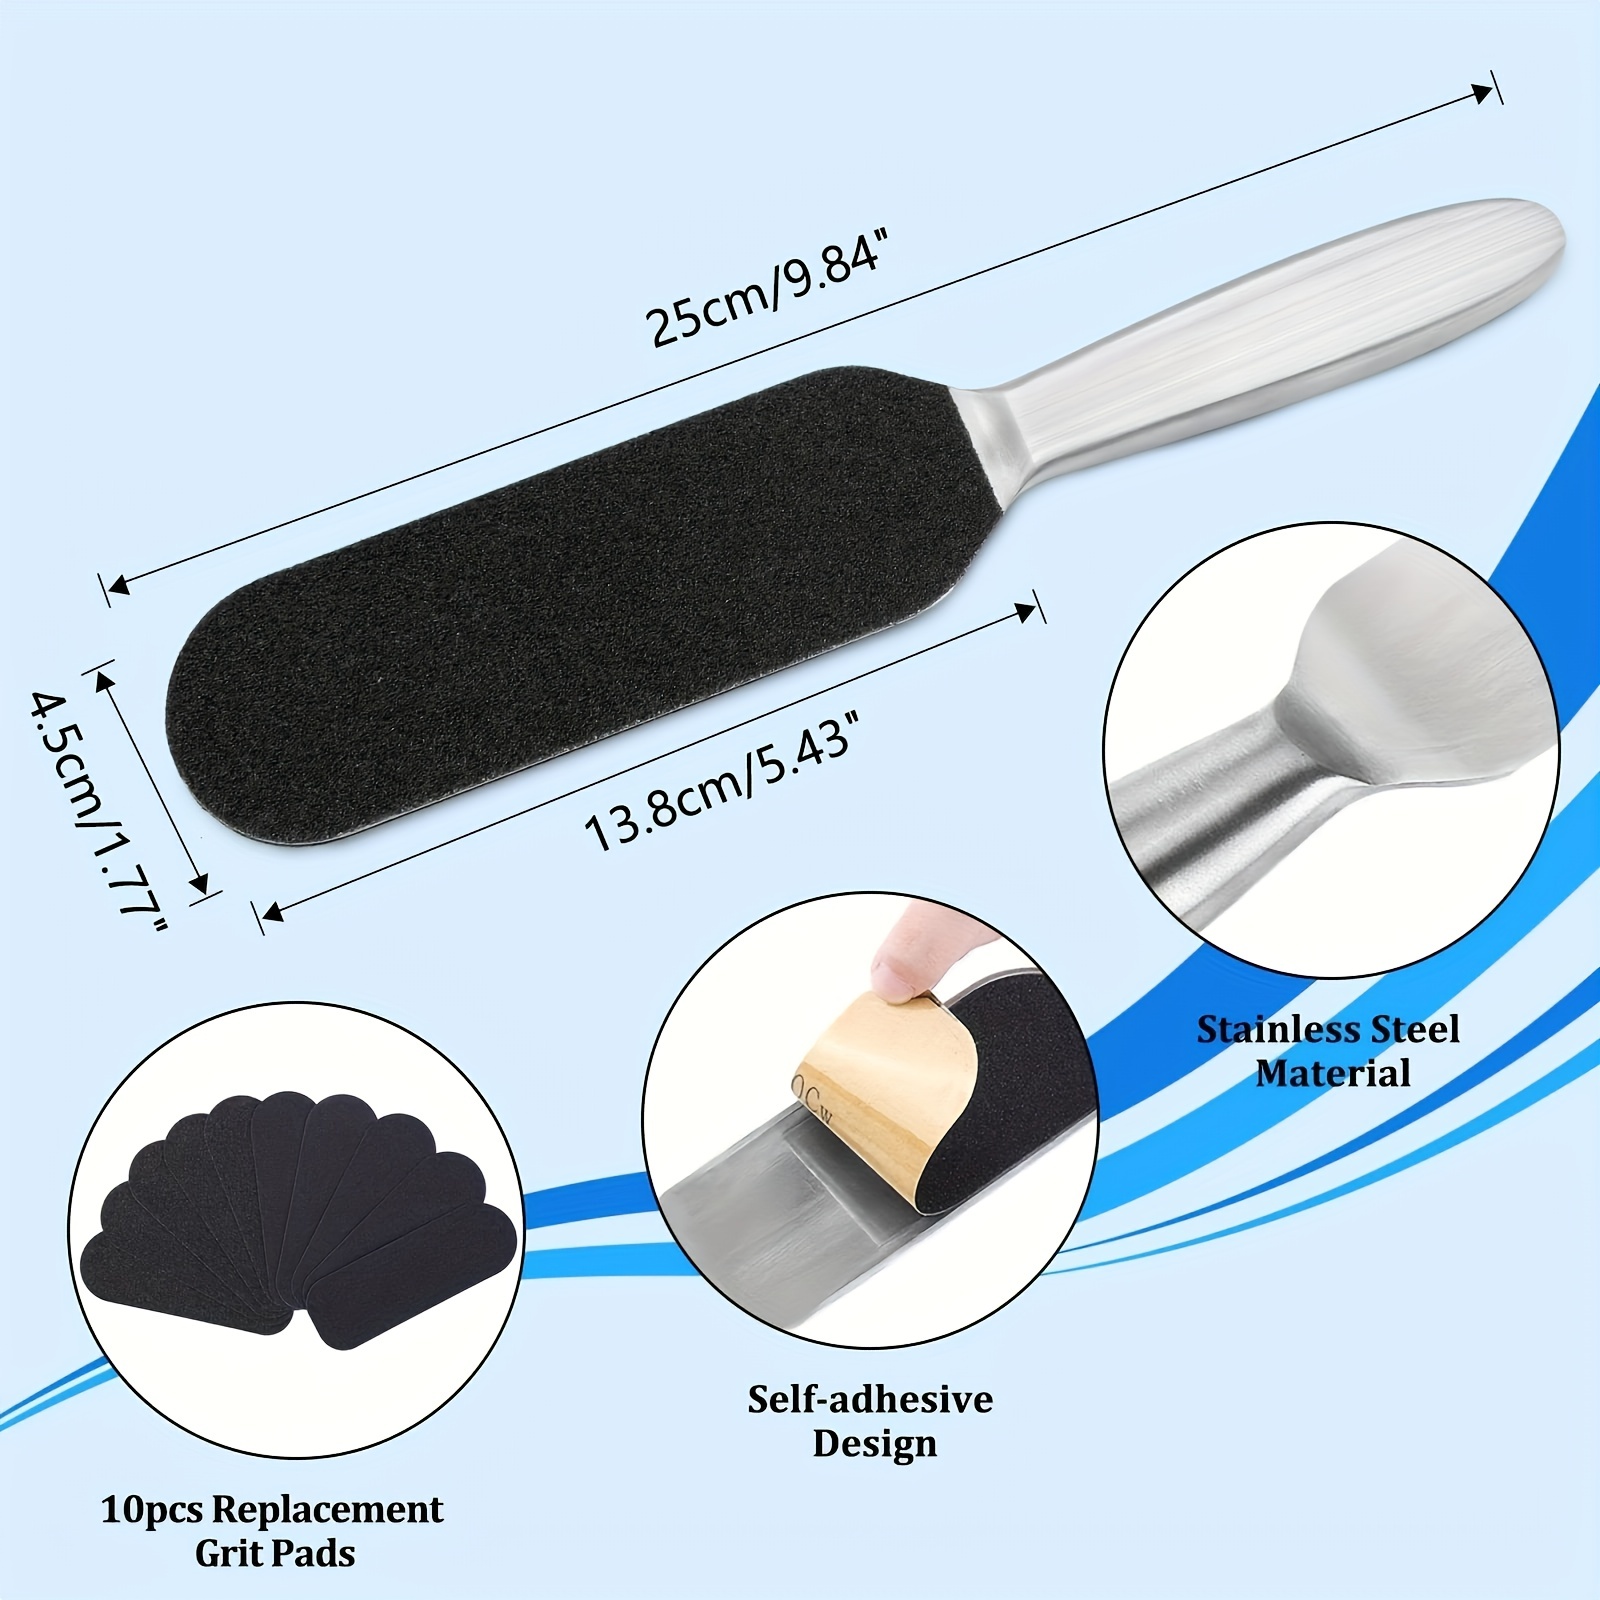 Stainless Steel Foot File Coarse Callus Remover Pedicure Rasp Foot Scraper